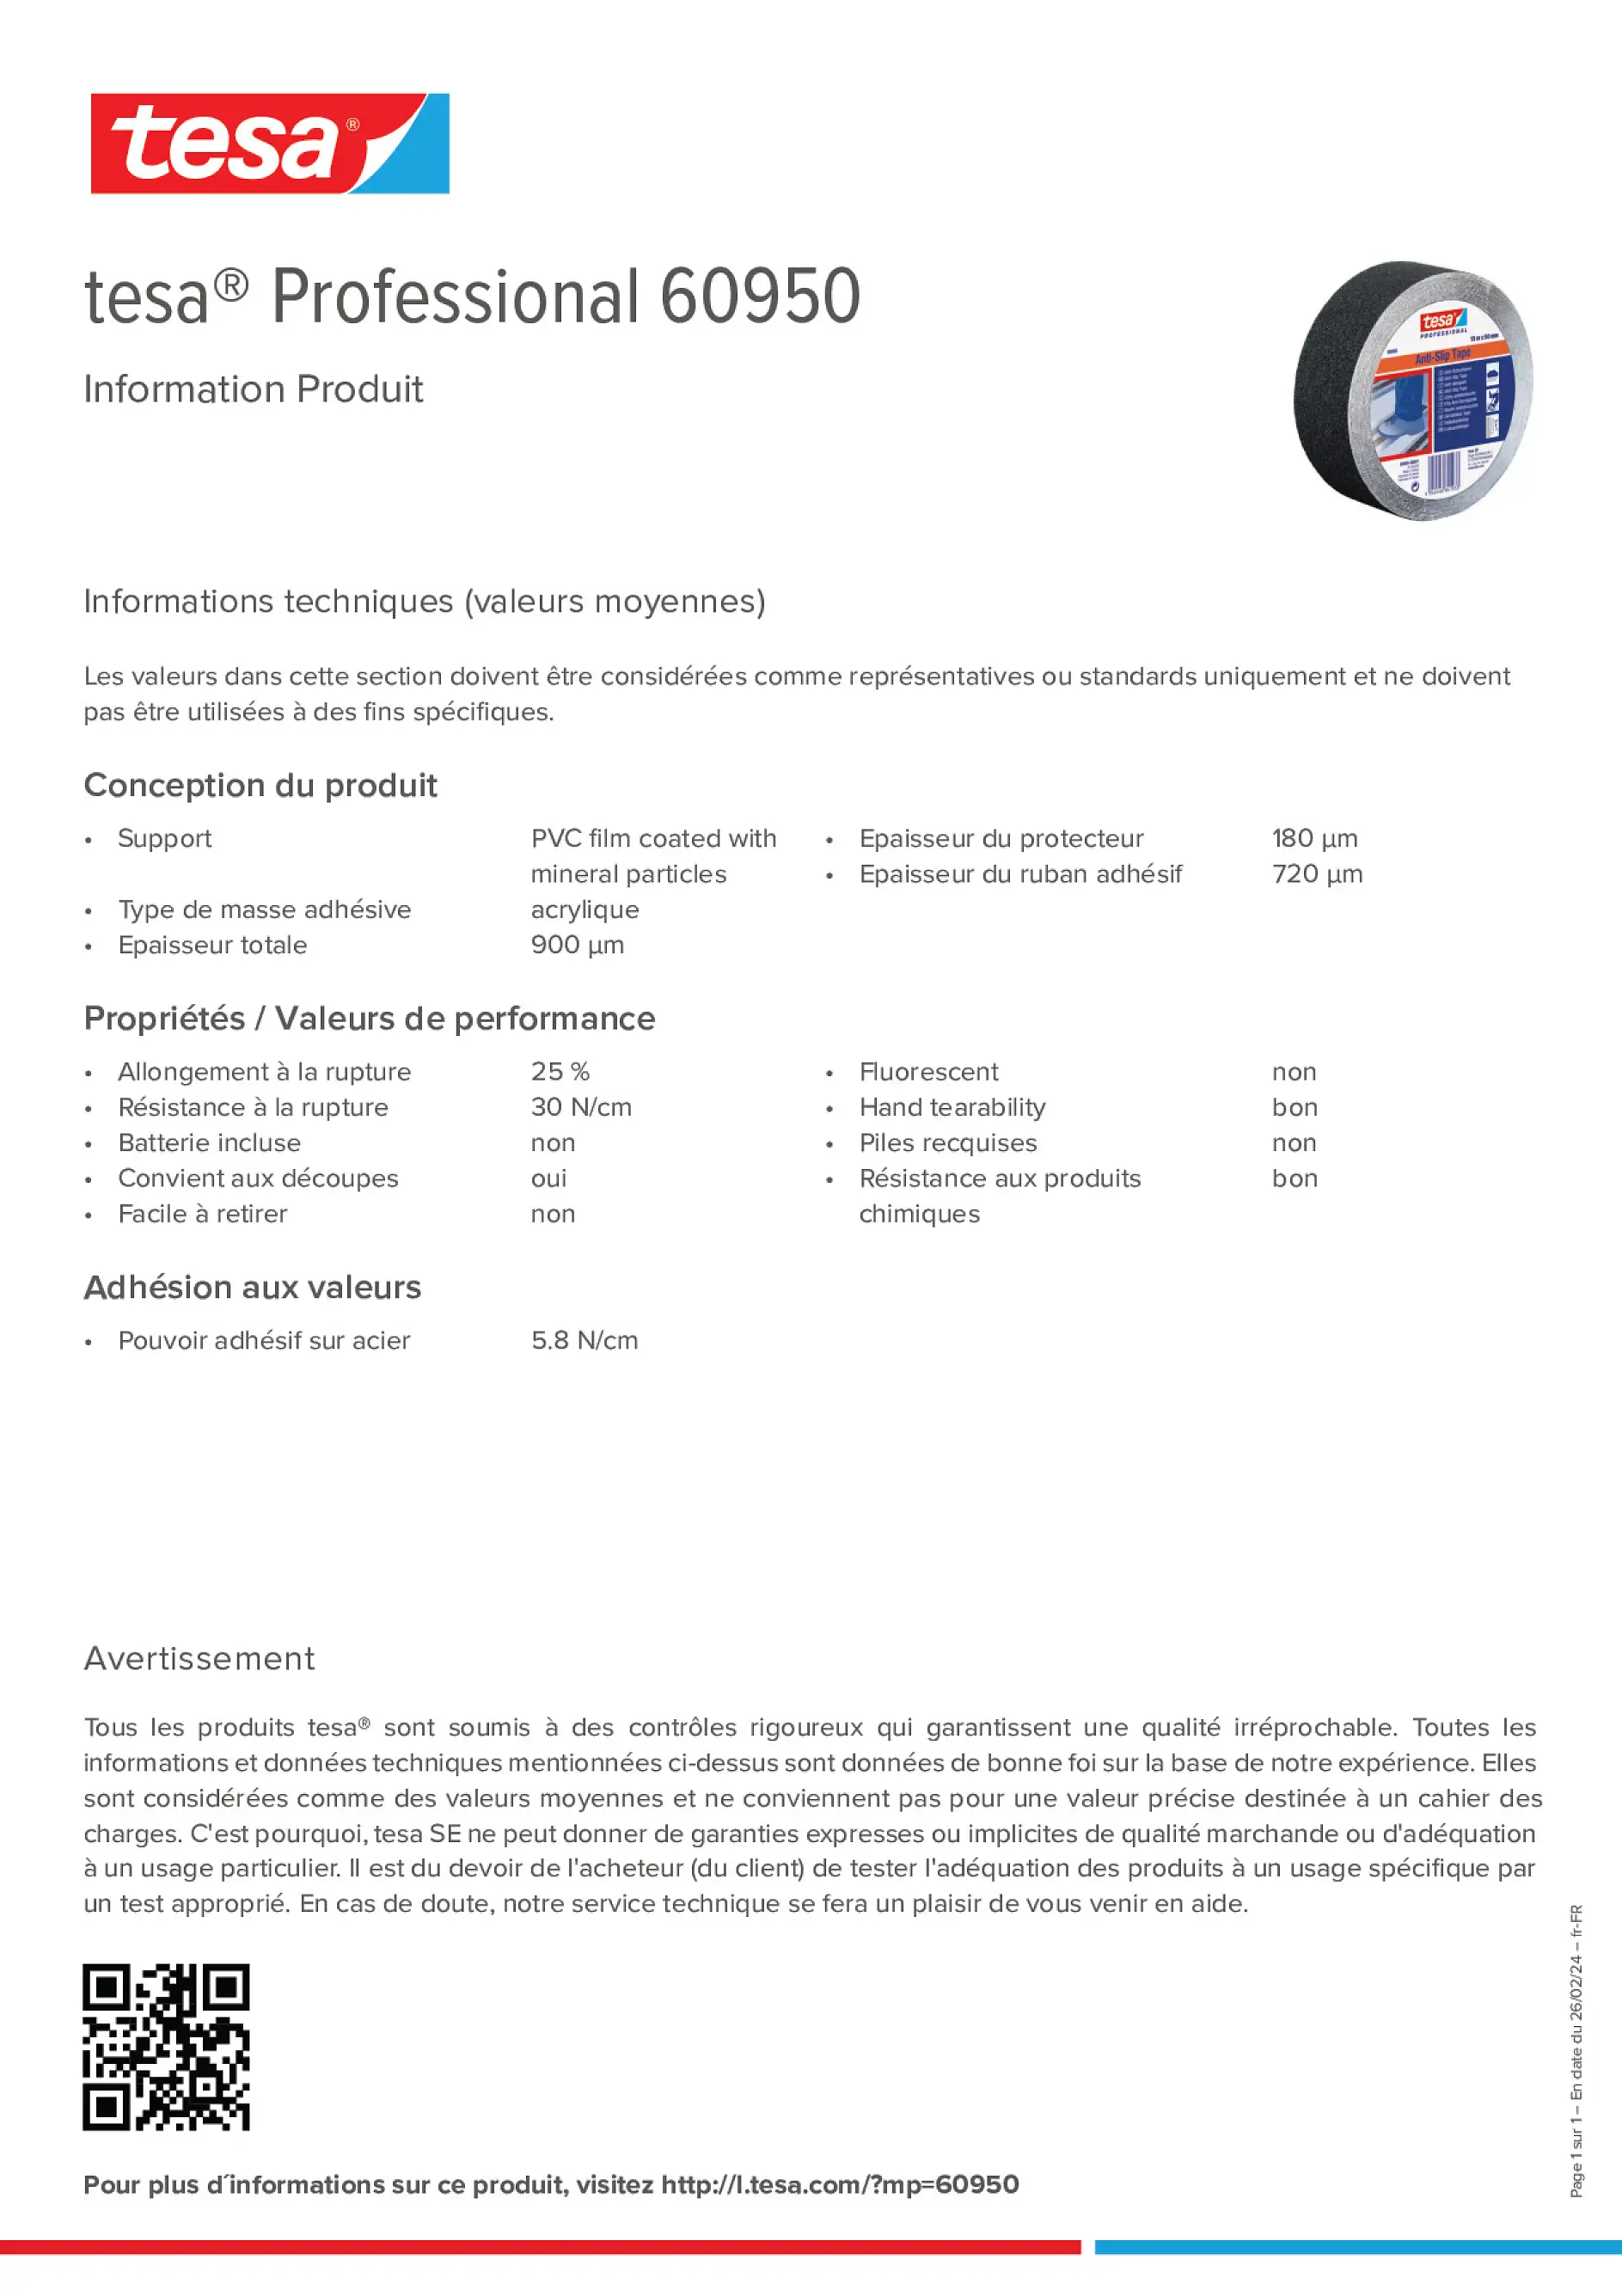 Product information_tesa® Professional 60950_fr-FR